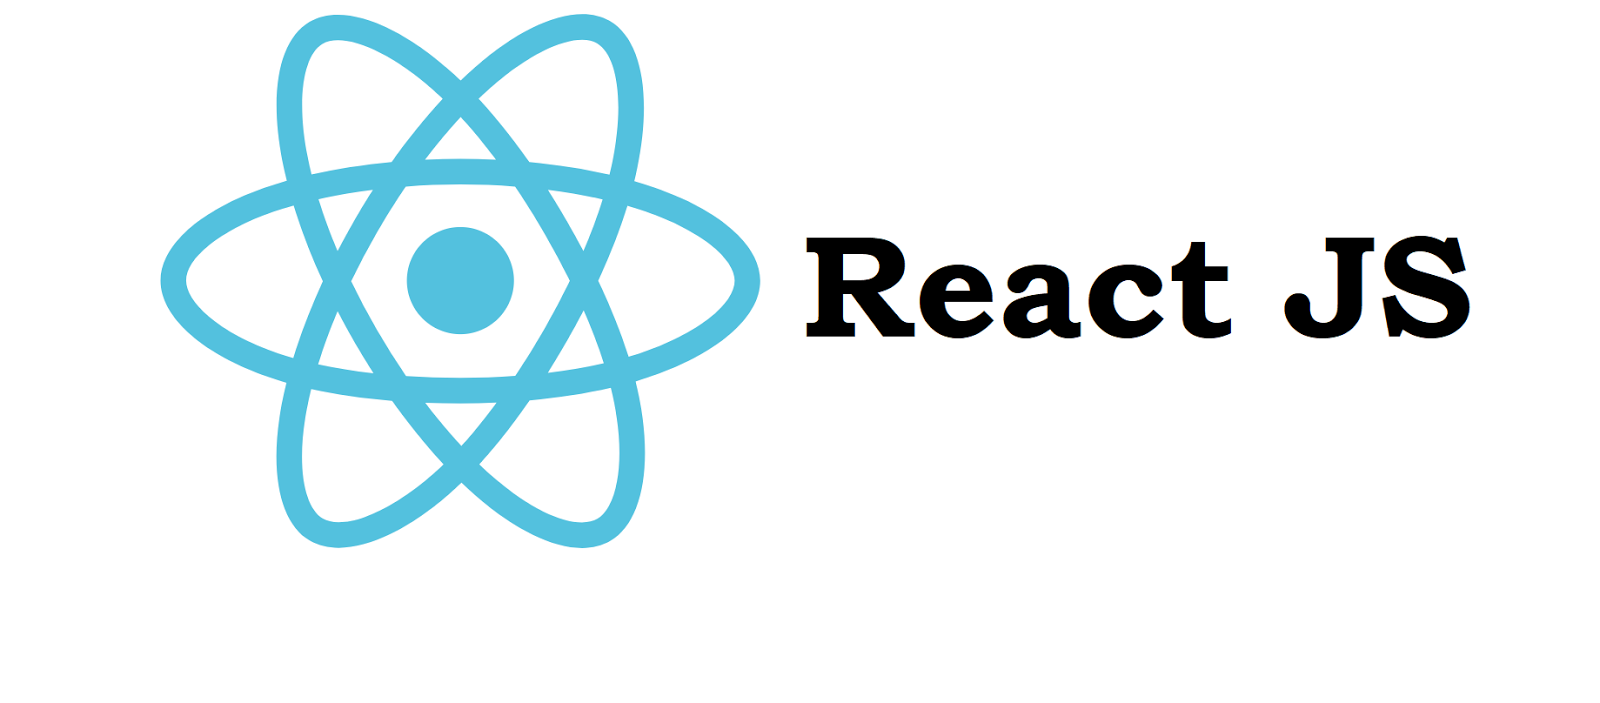 We work on React JS